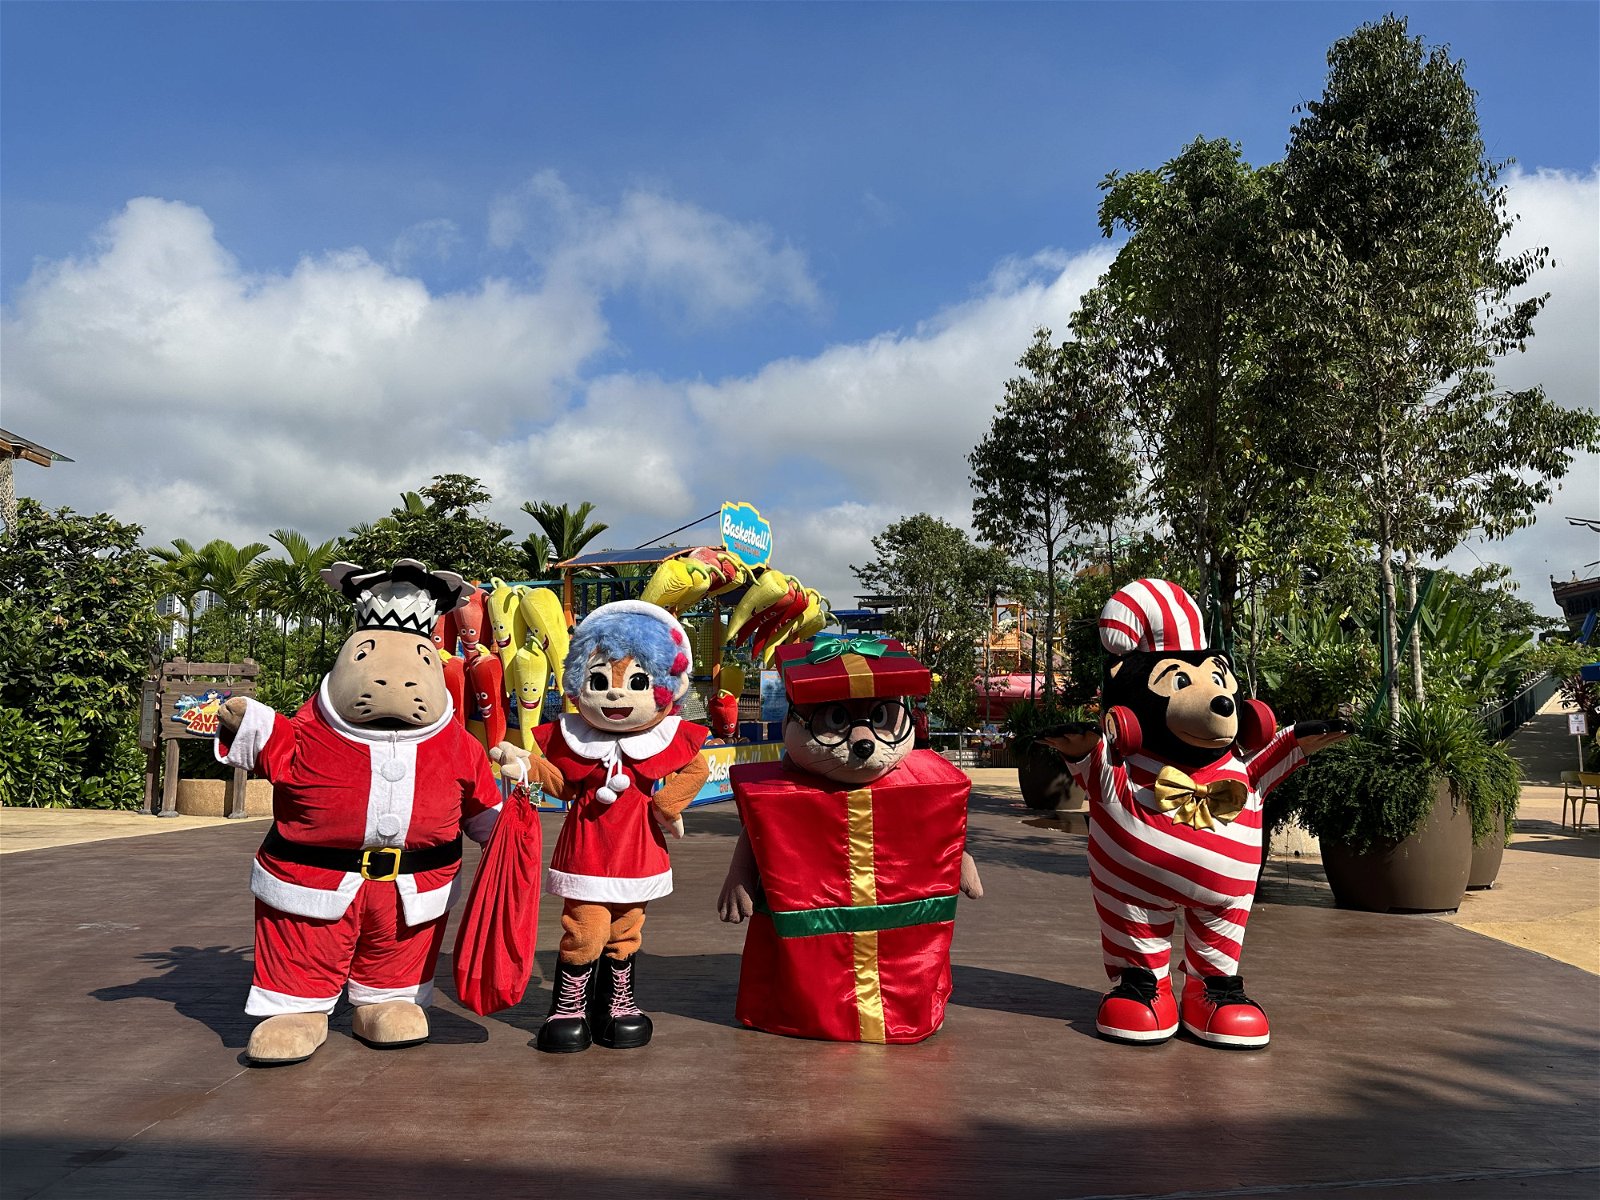 Splash小队——包括Omba’King小儿鲸、Zoomi猩猩、Max水獭和Swaggy B熊——穿著节日装扮，迎接圣诞的盛会！